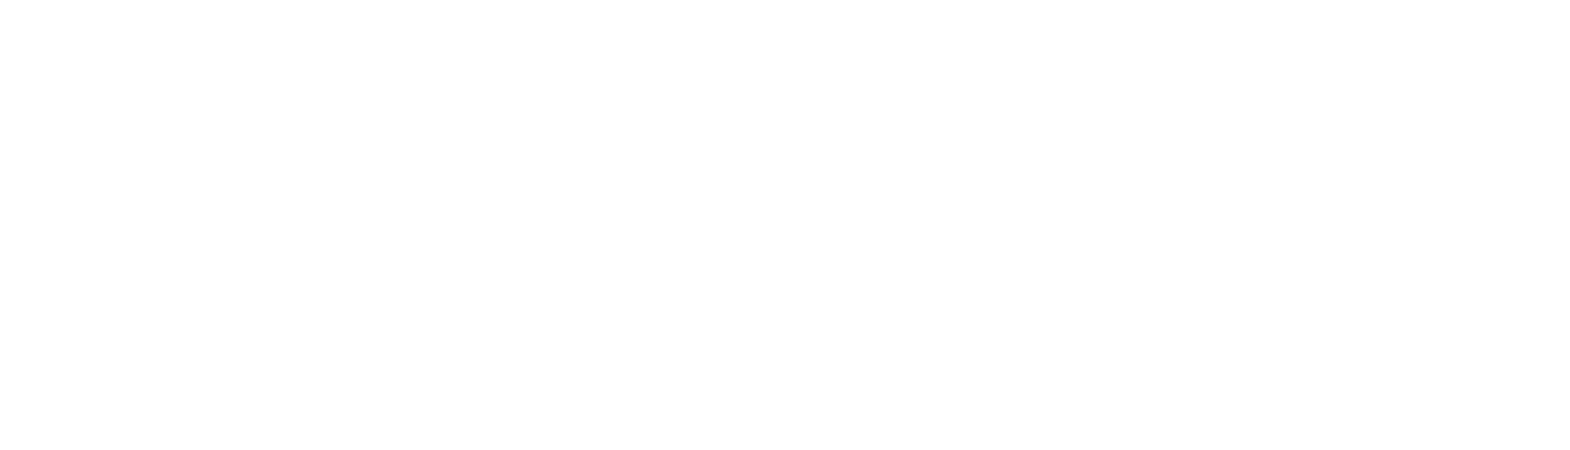 Global Fashion Group Logo groß für dunkle Hintergründe (transparentes PNG)